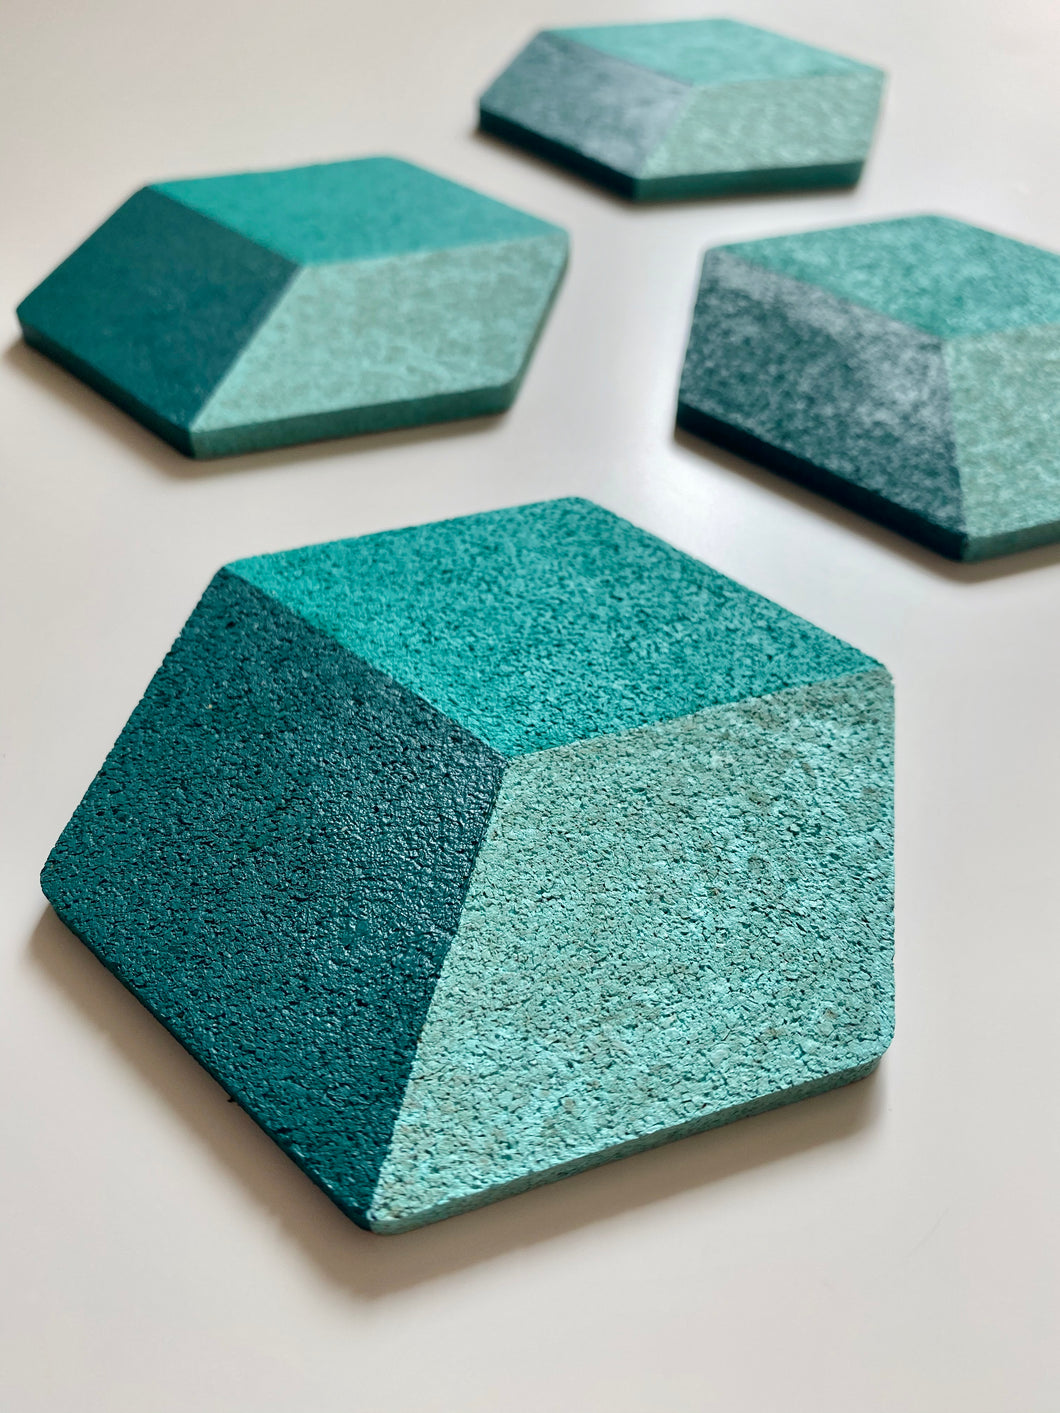 Geometric Hexagon Cork Coasters Teal